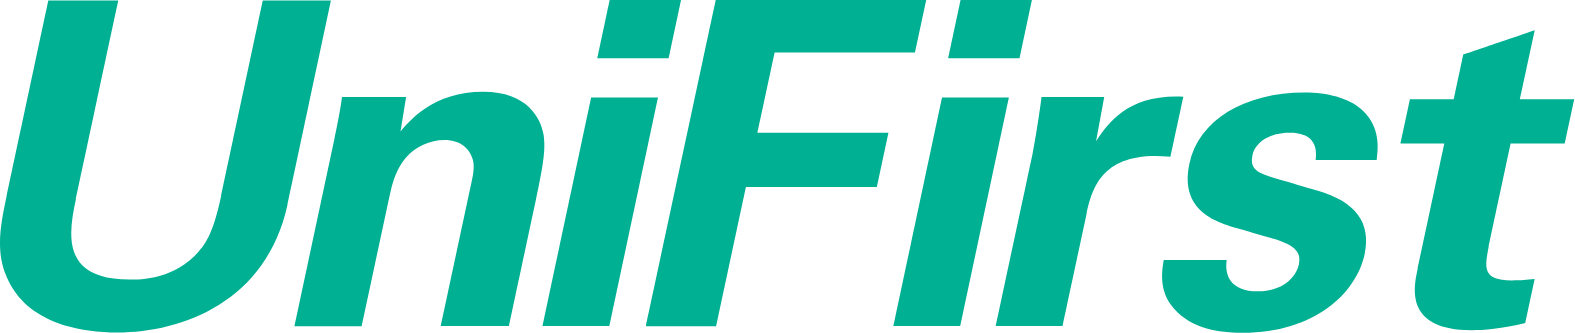 UniFirst logo large (transparent PNG)